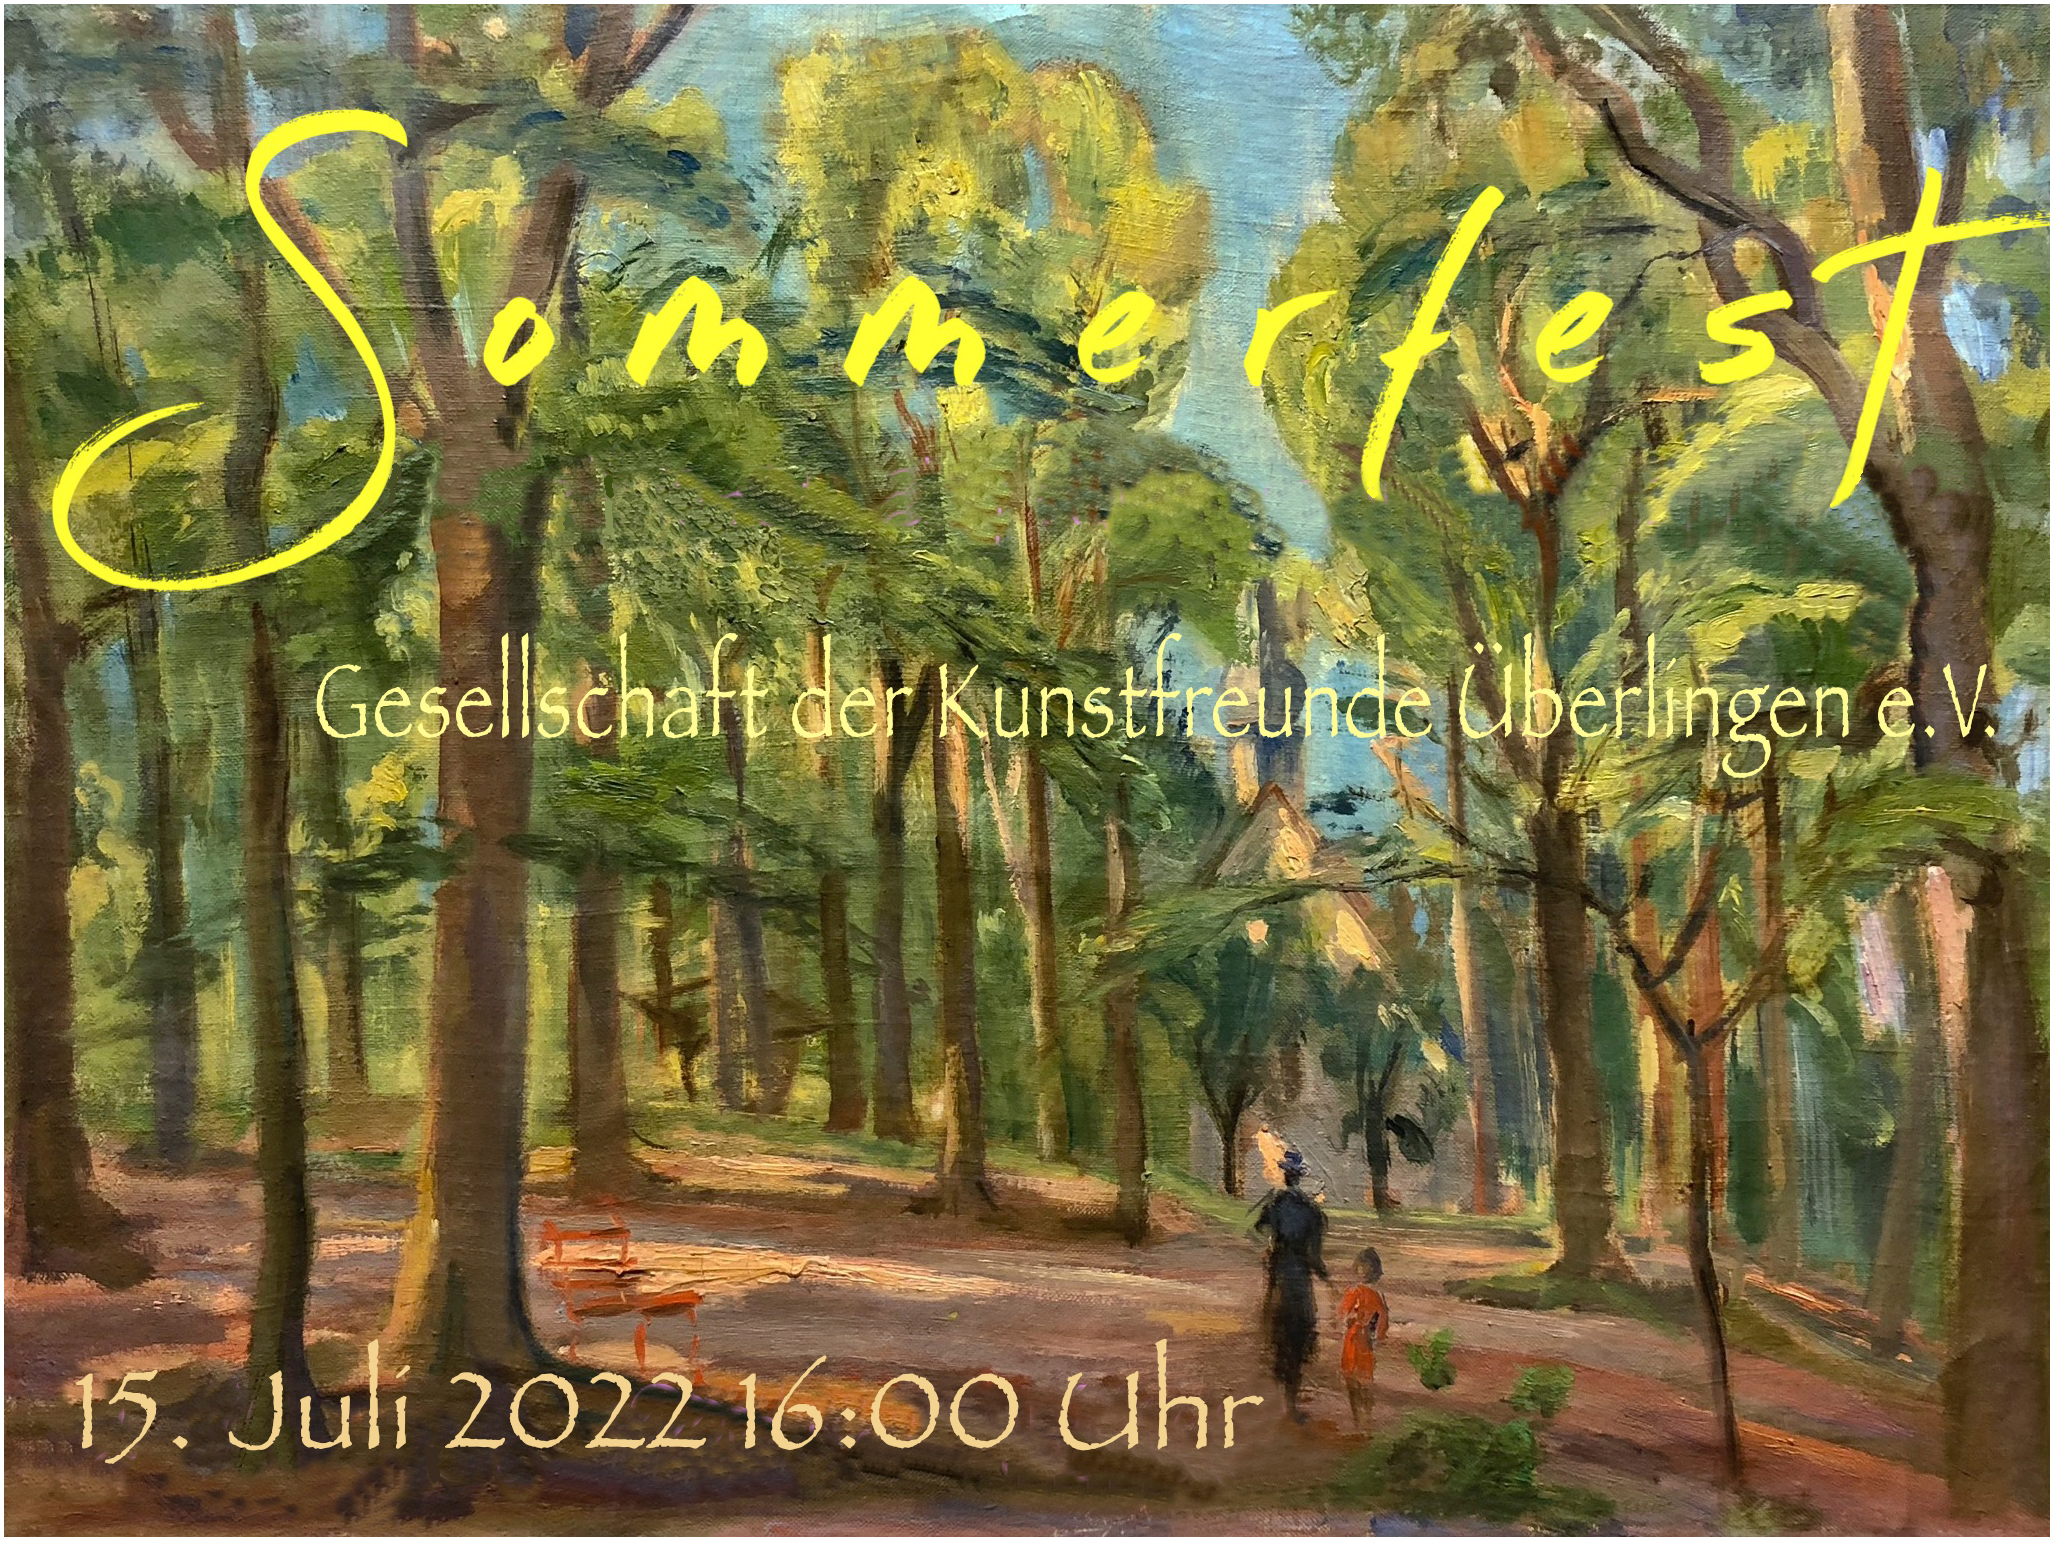 Gesellschaft der Kunstfreune, Sommerfest 2022